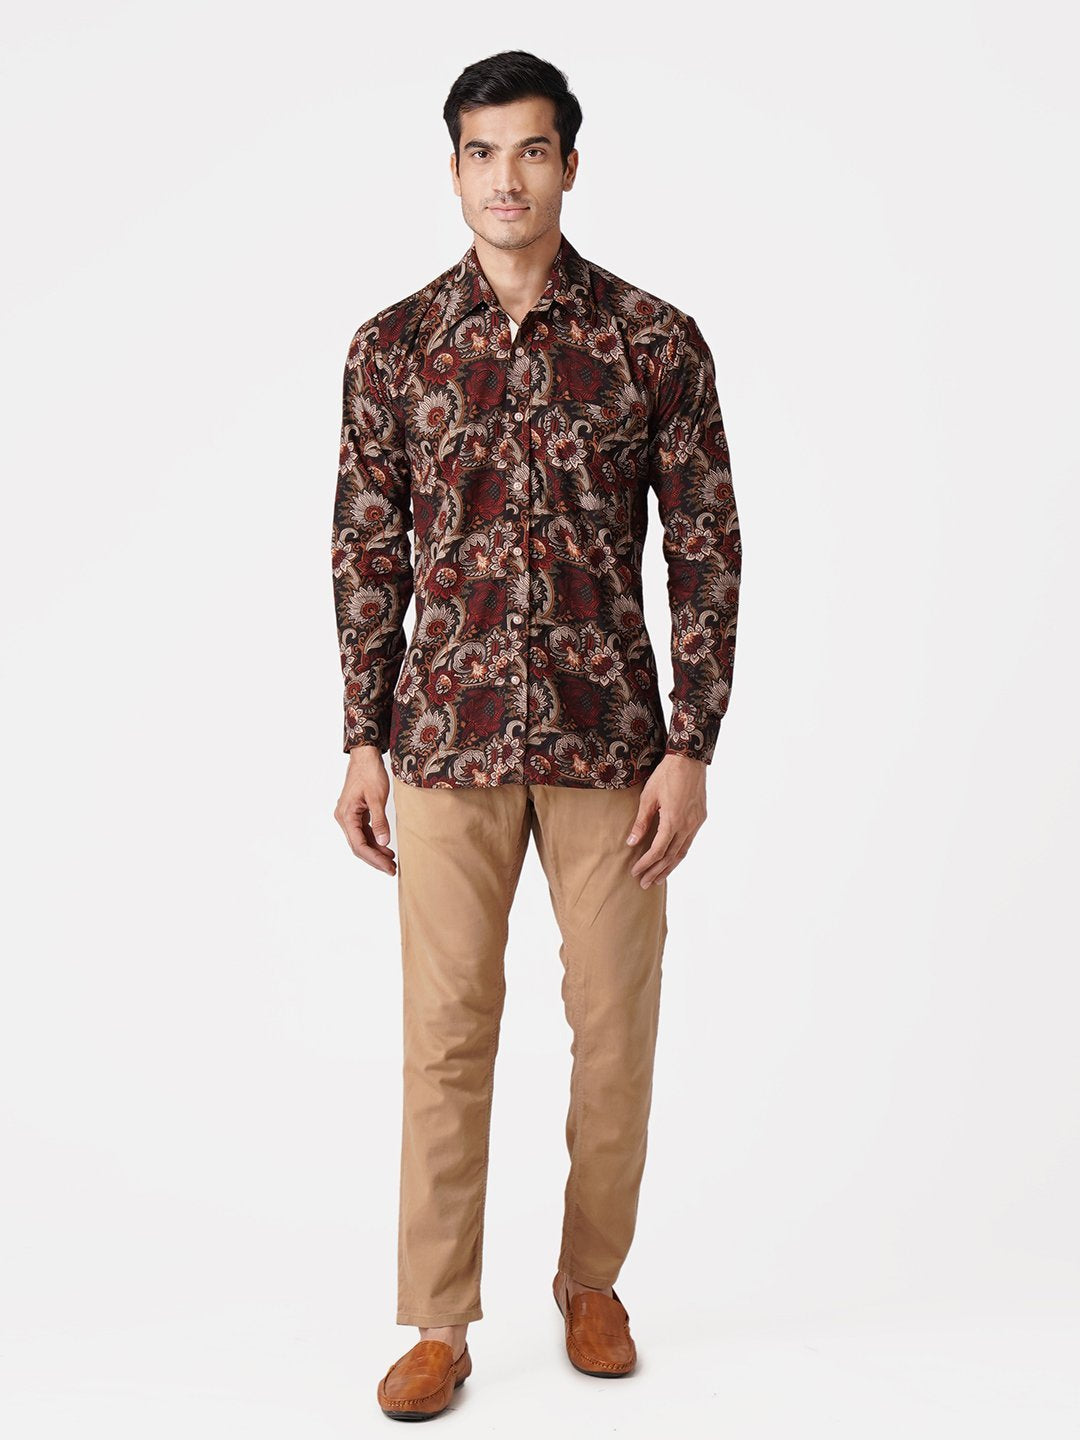 WINTAGE Men's Jaipur Cotton Tropical Hawaiian Batik Casual Shirt: Maroon